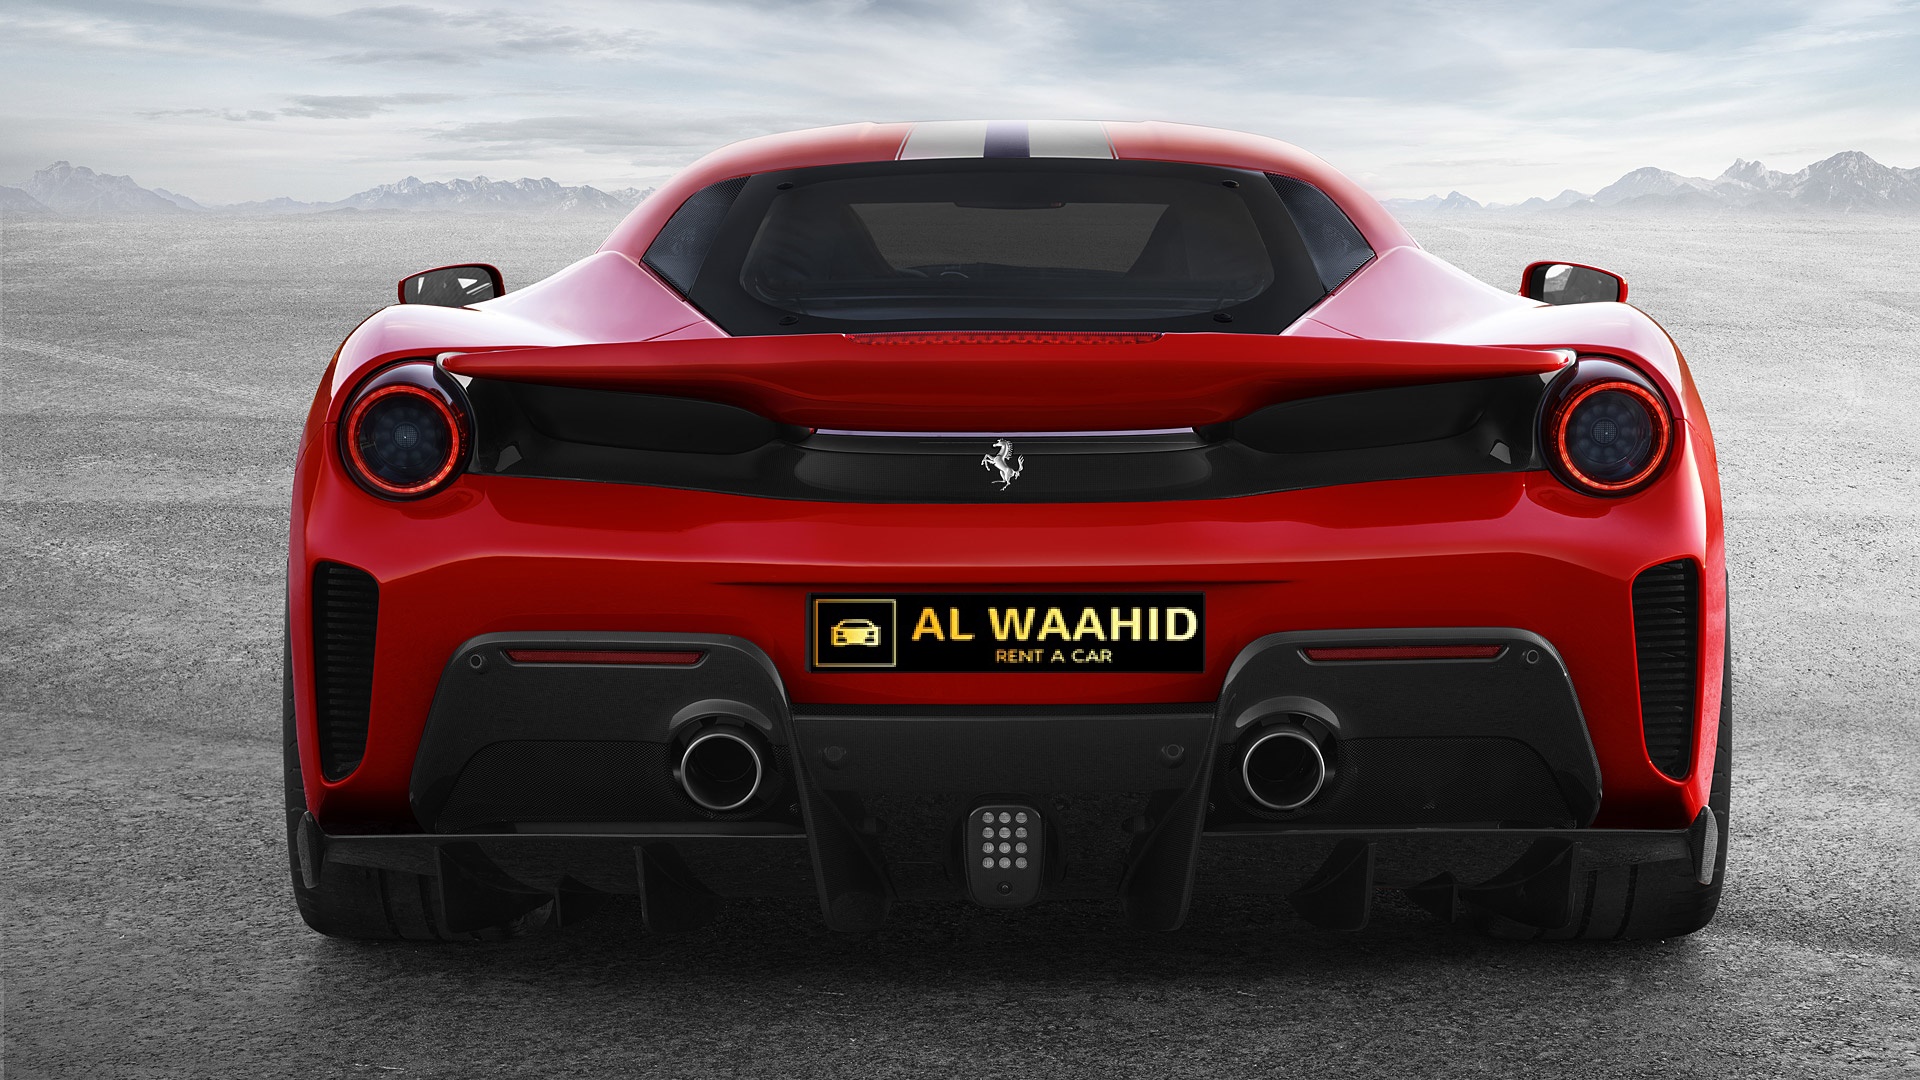 Ferrari 488 Pista 2019 rental dubai luxury cars alwaheed rental